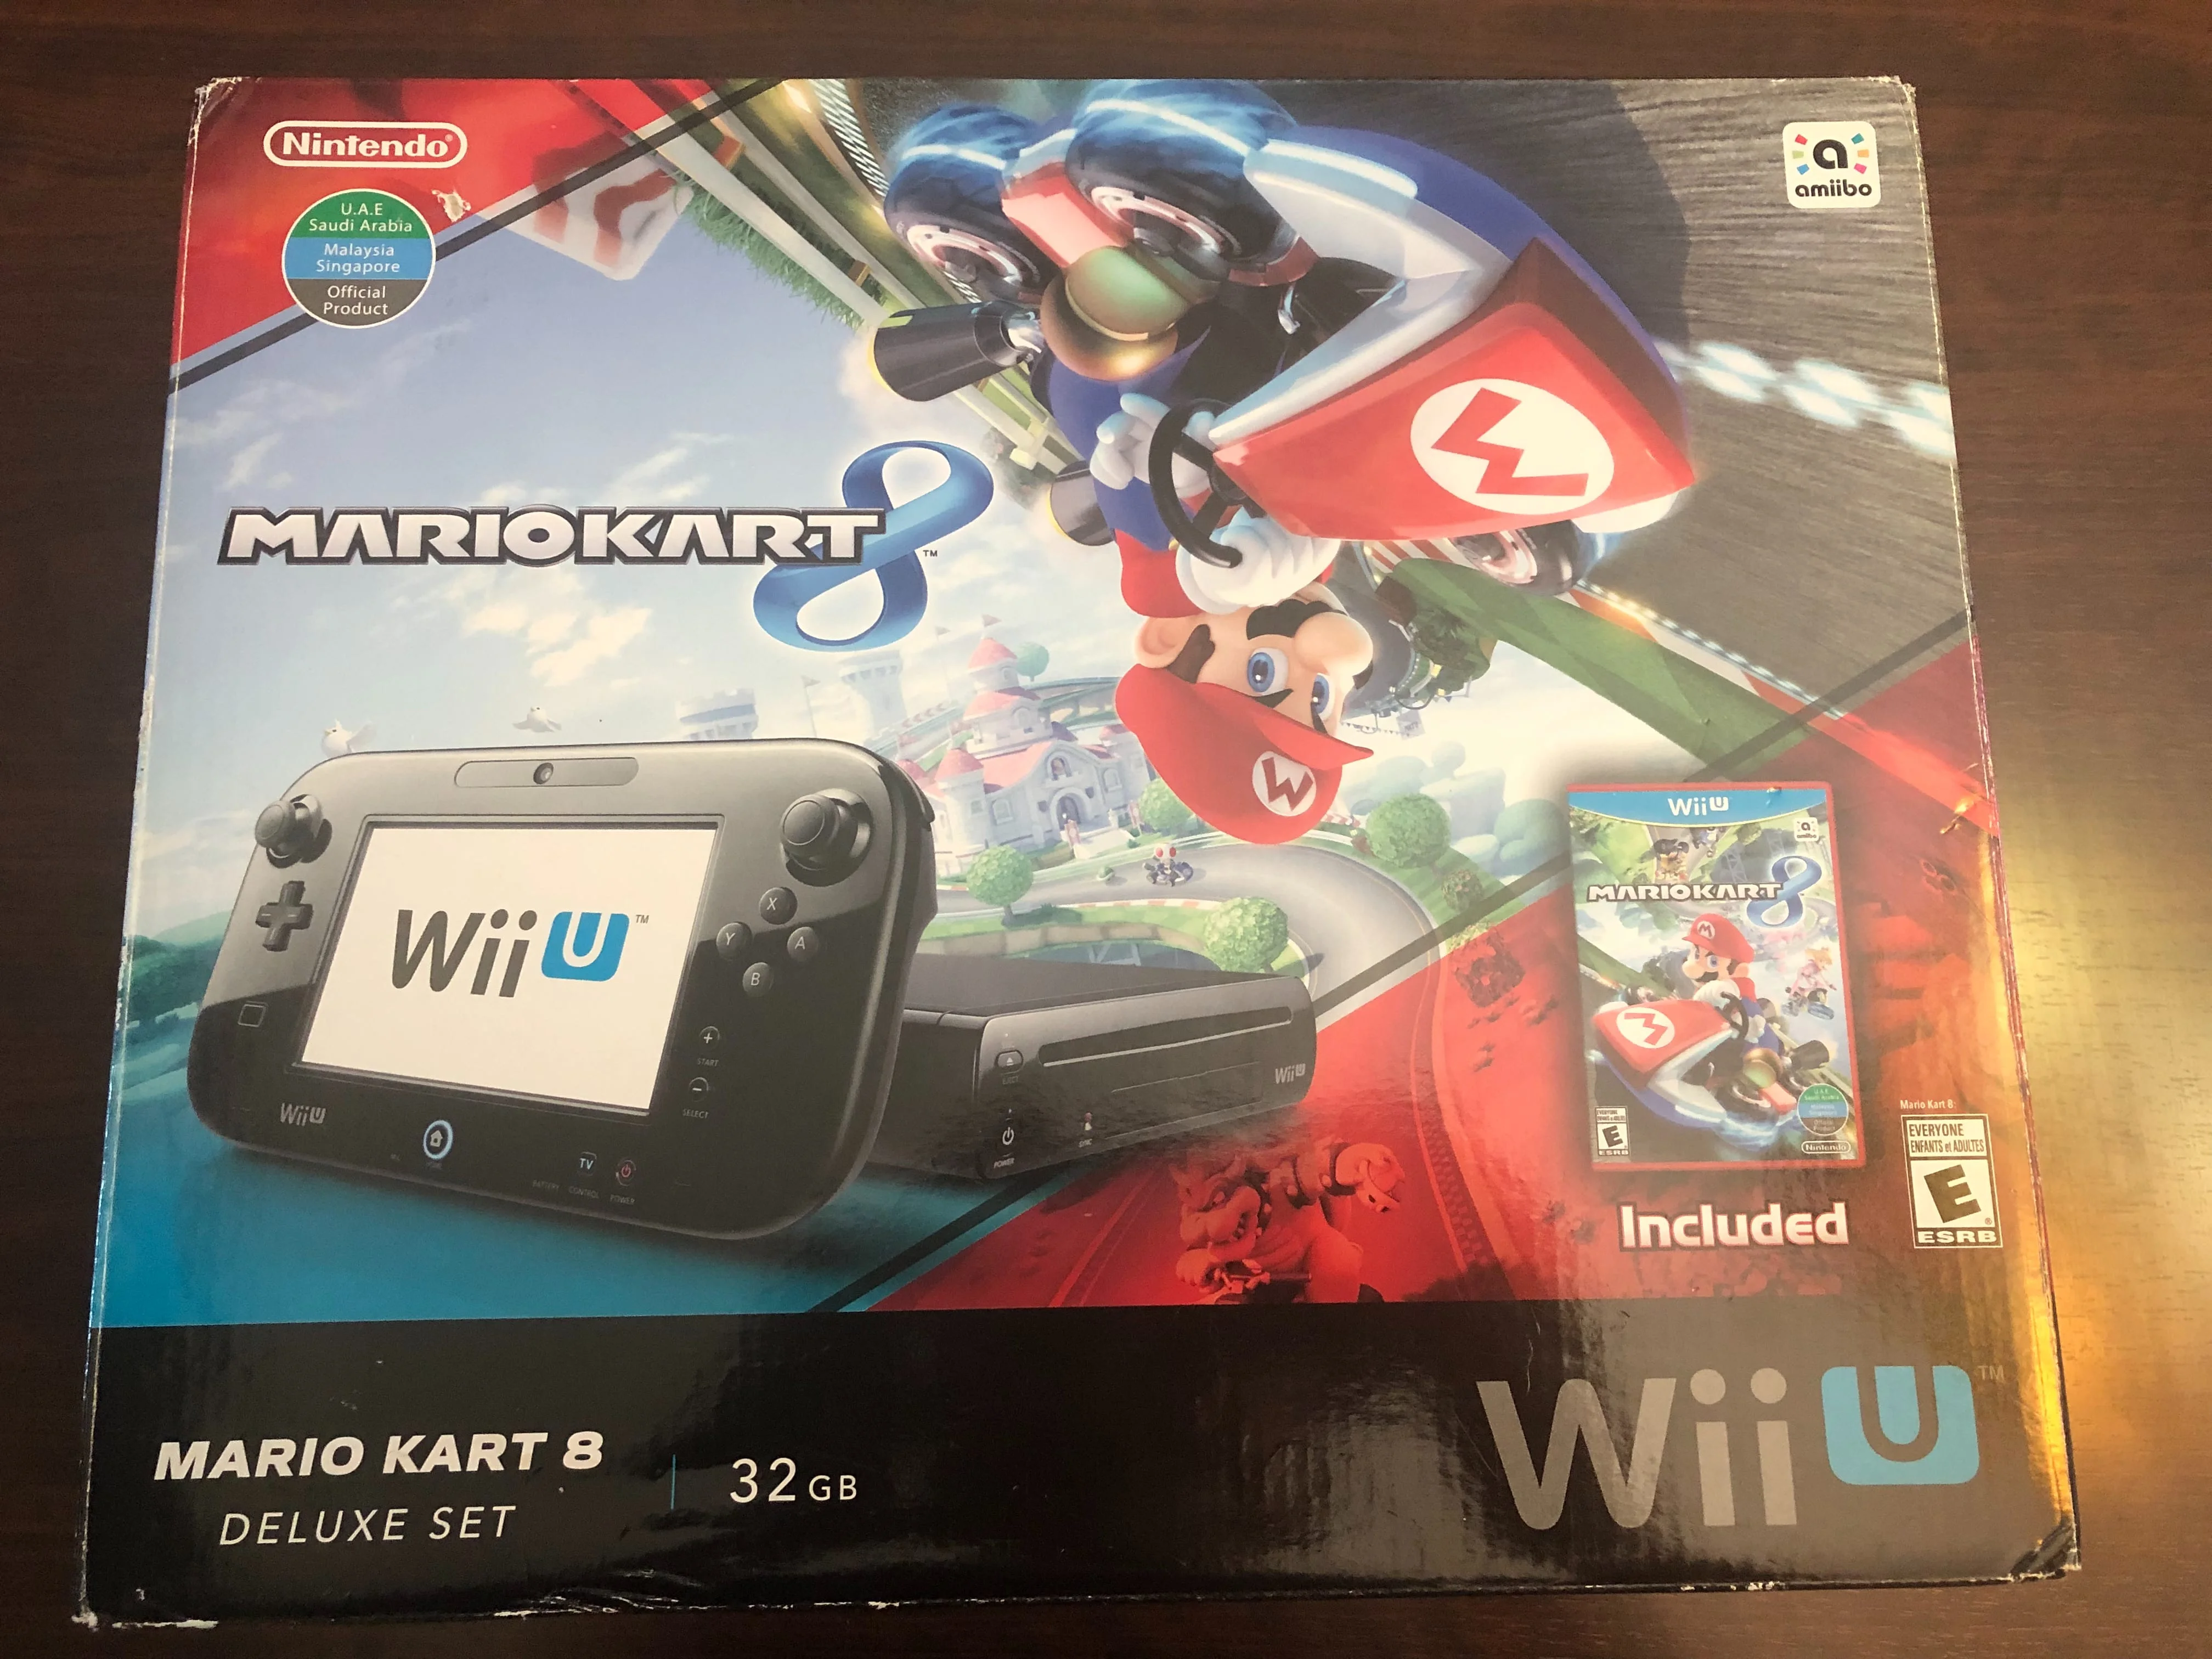  Nintendo Wii U Mario Kart 8 Bundle